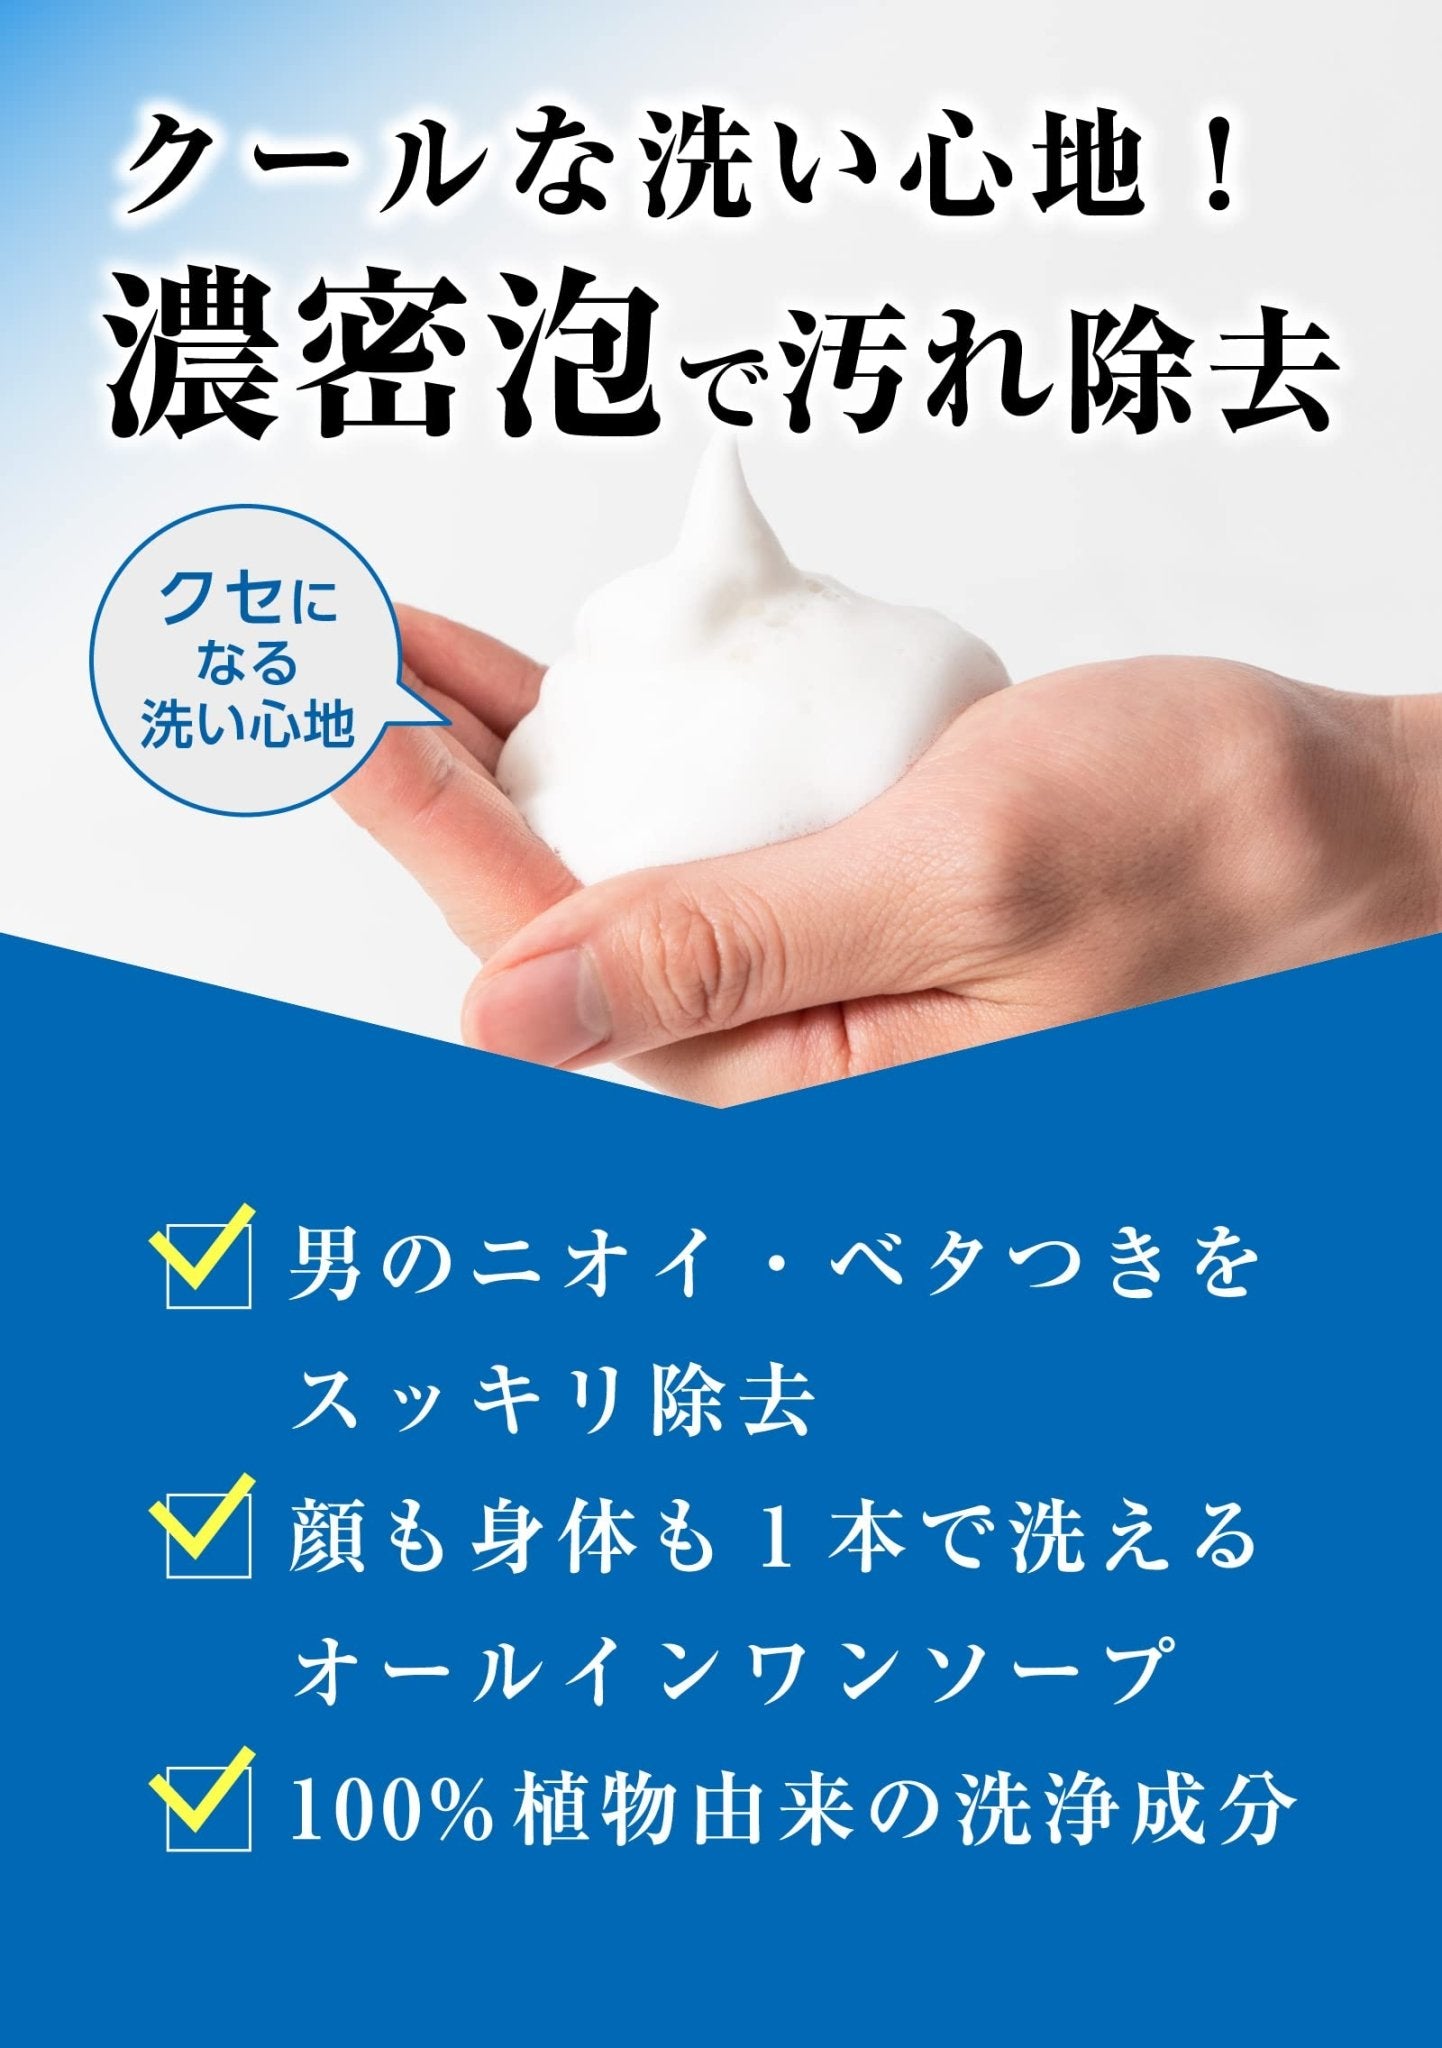 Ettusais Japan Lip Essence Stick & Lip Serum Spf18 Pa++ 3G - YOYO JAPAN